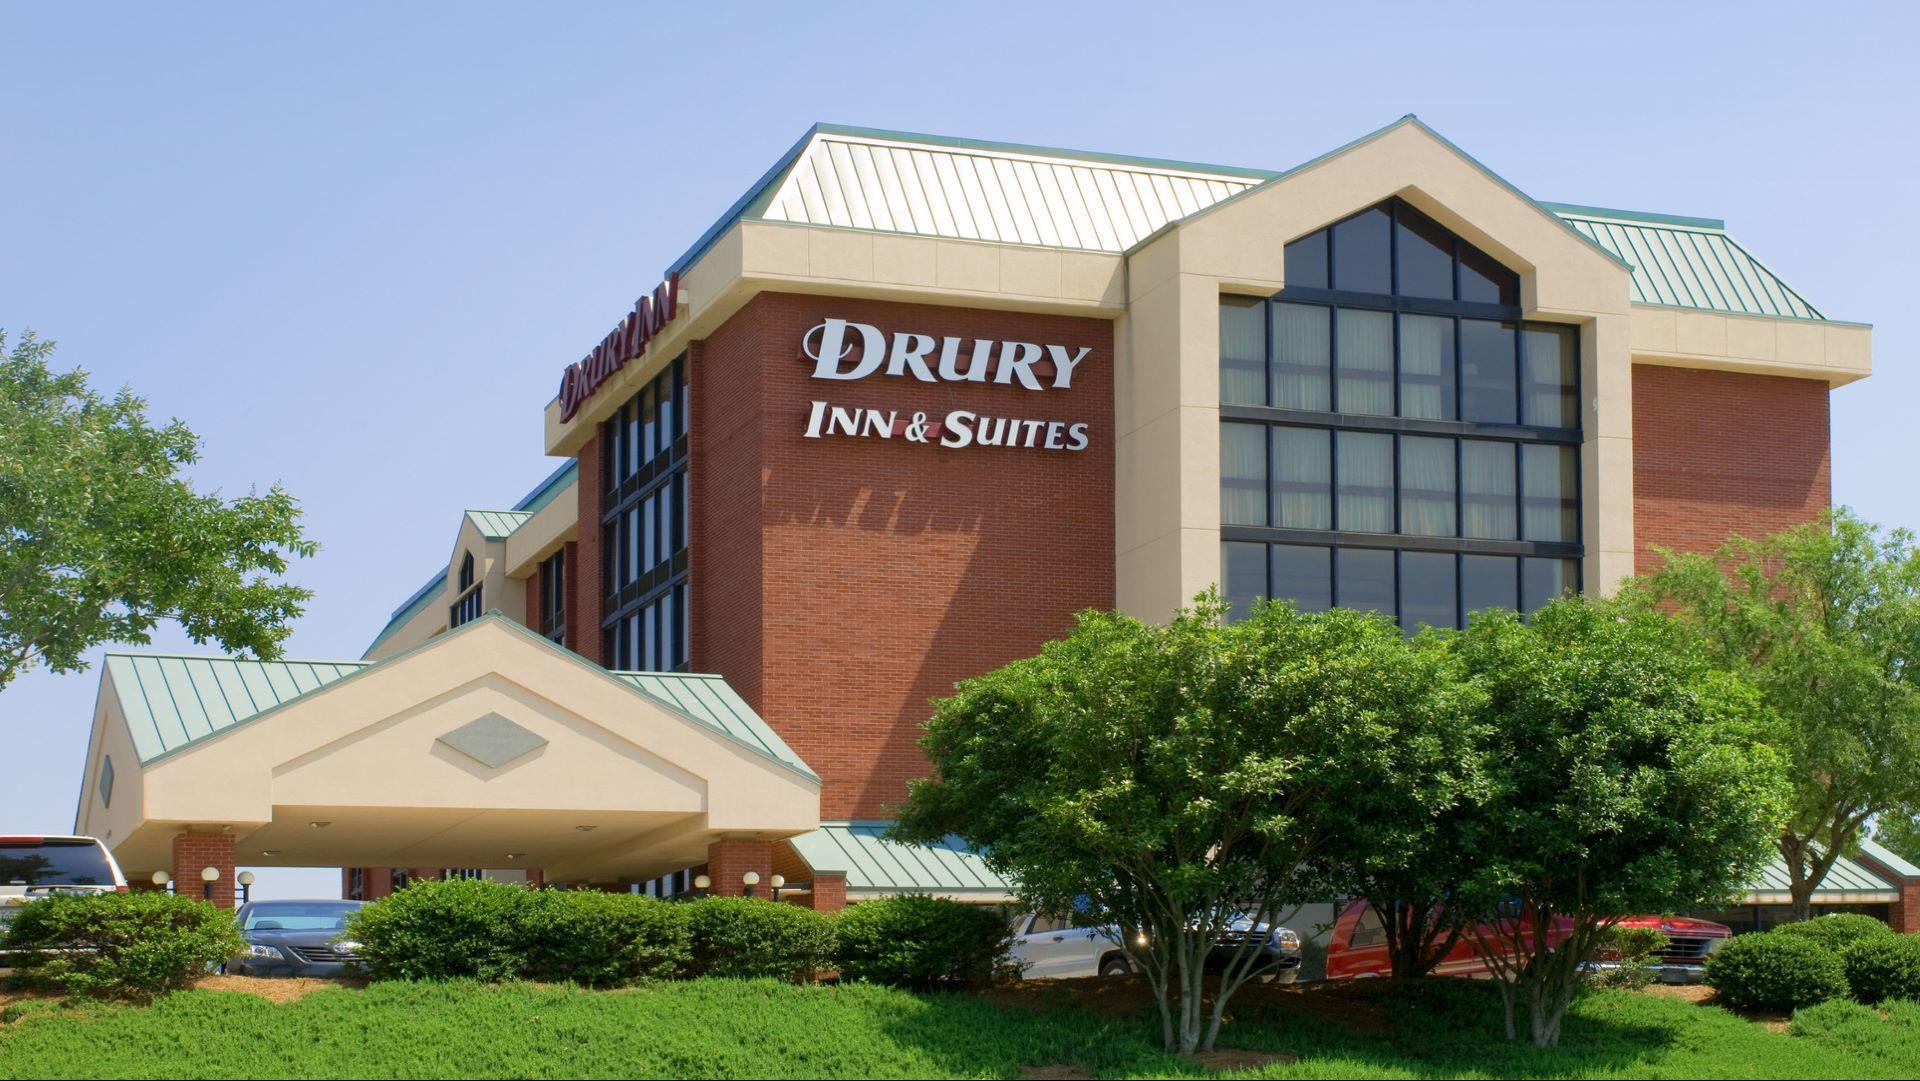 Drury Inn & Suites Atlanta Marietta in Marietta, GA